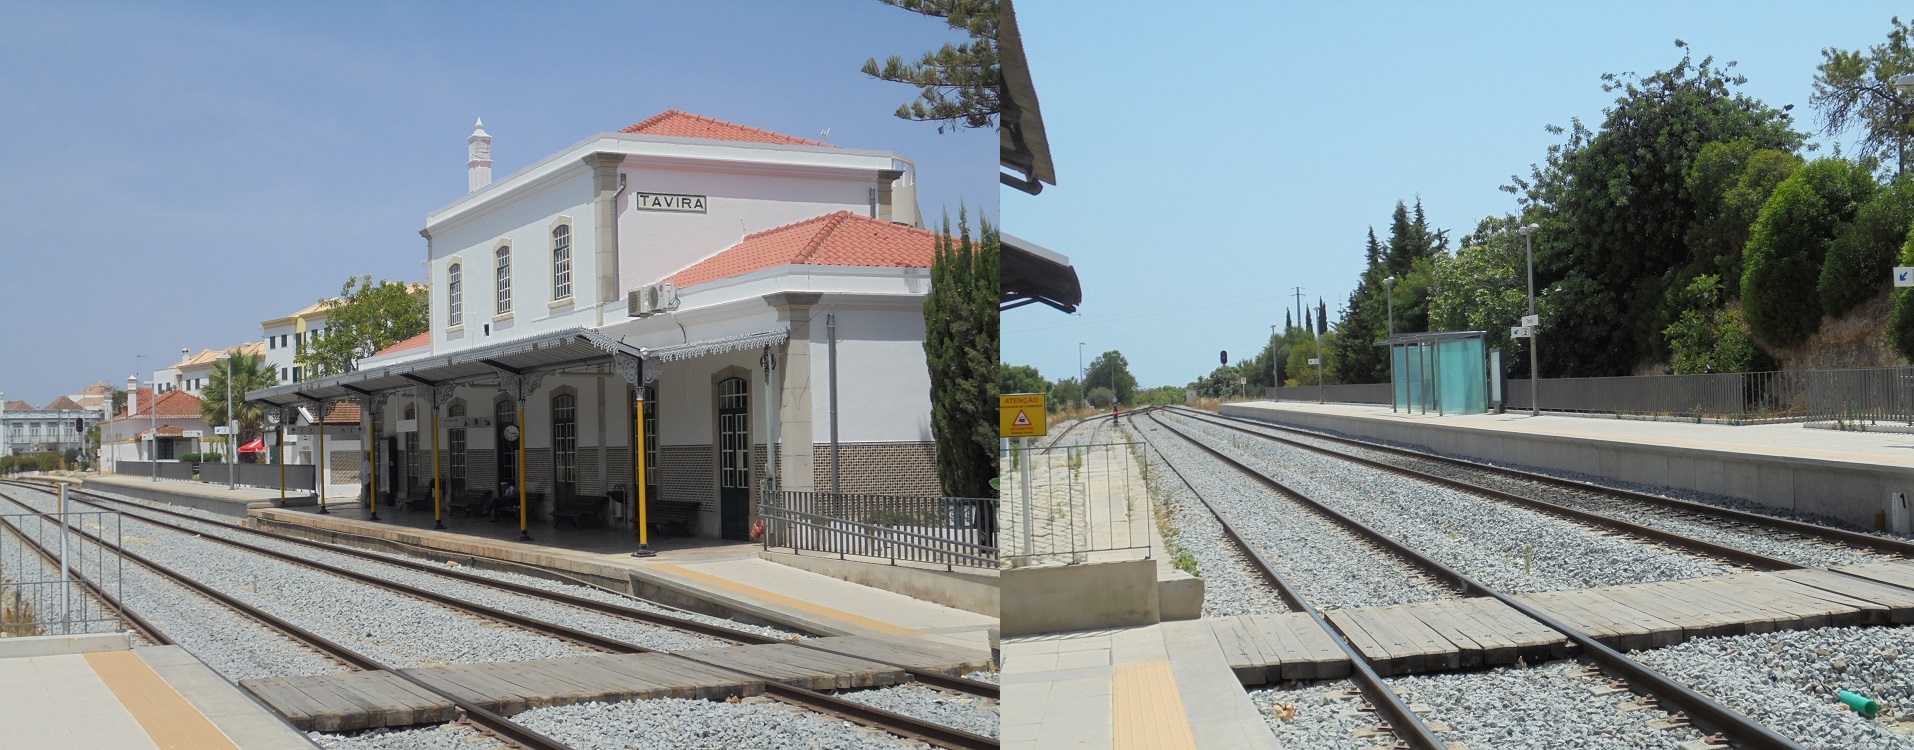 Tavira_railway_station_July_2015